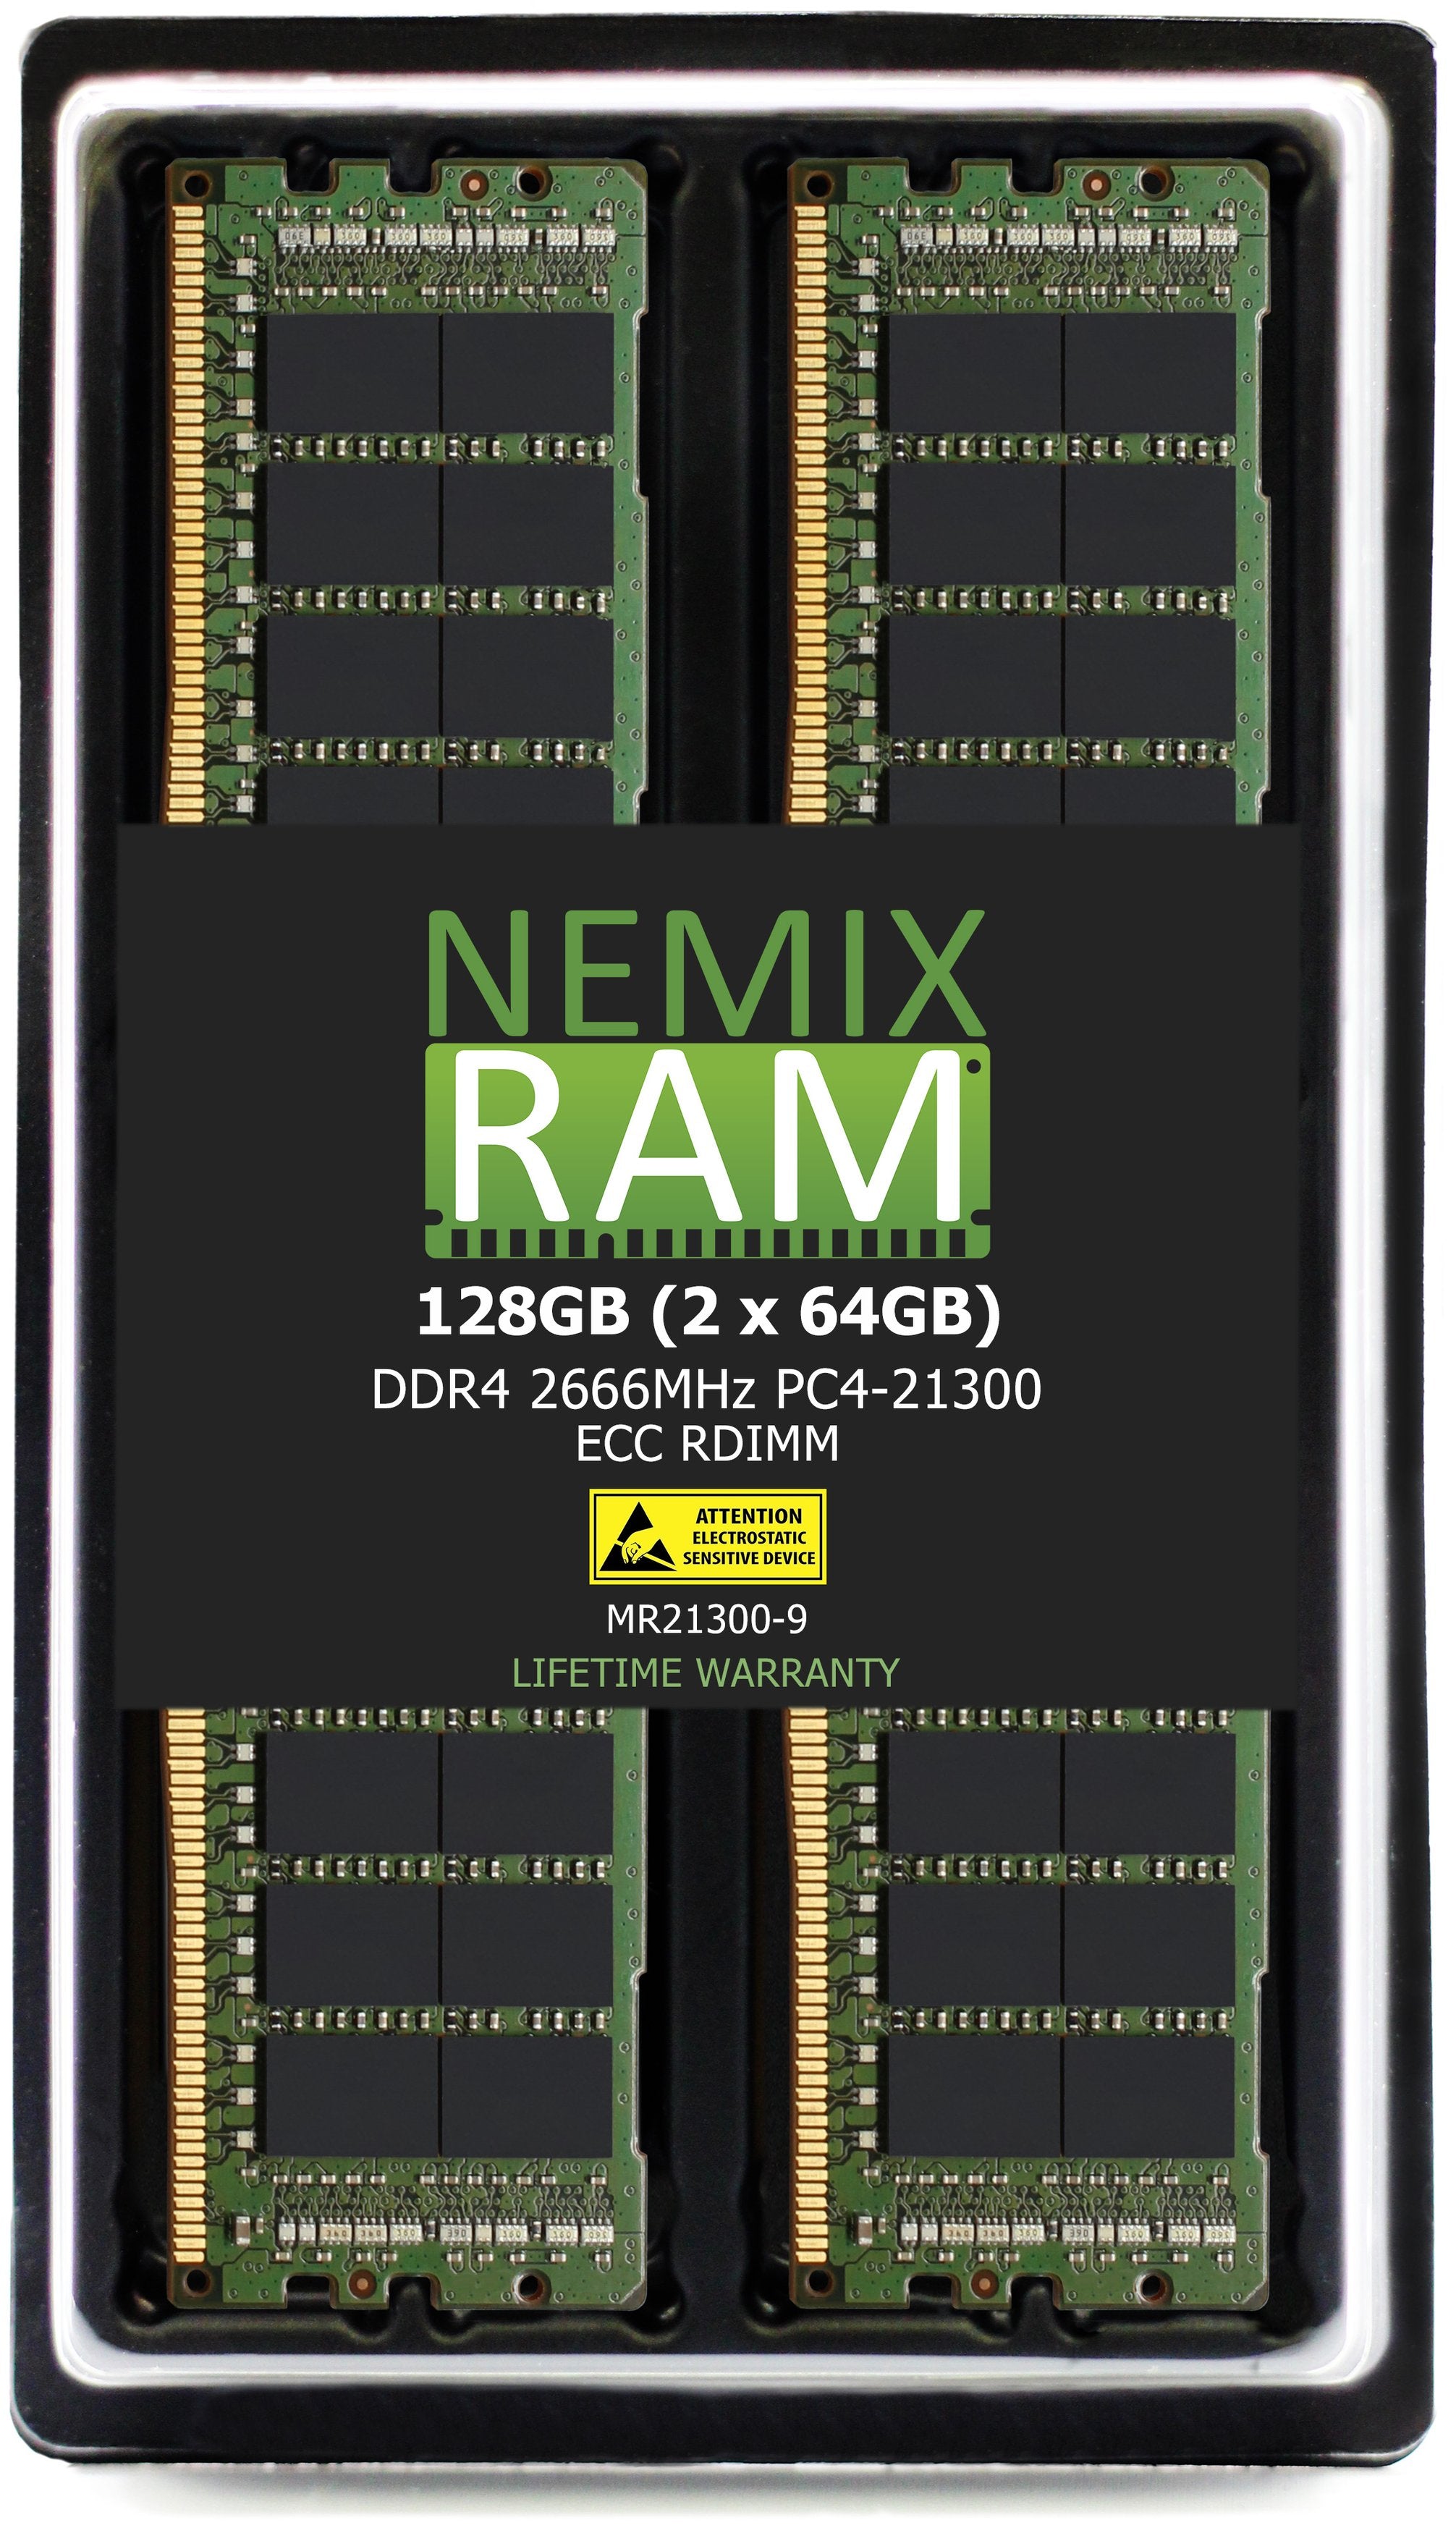 DDR4 2666MHZ PC4-21300 RDIMM 2RX4